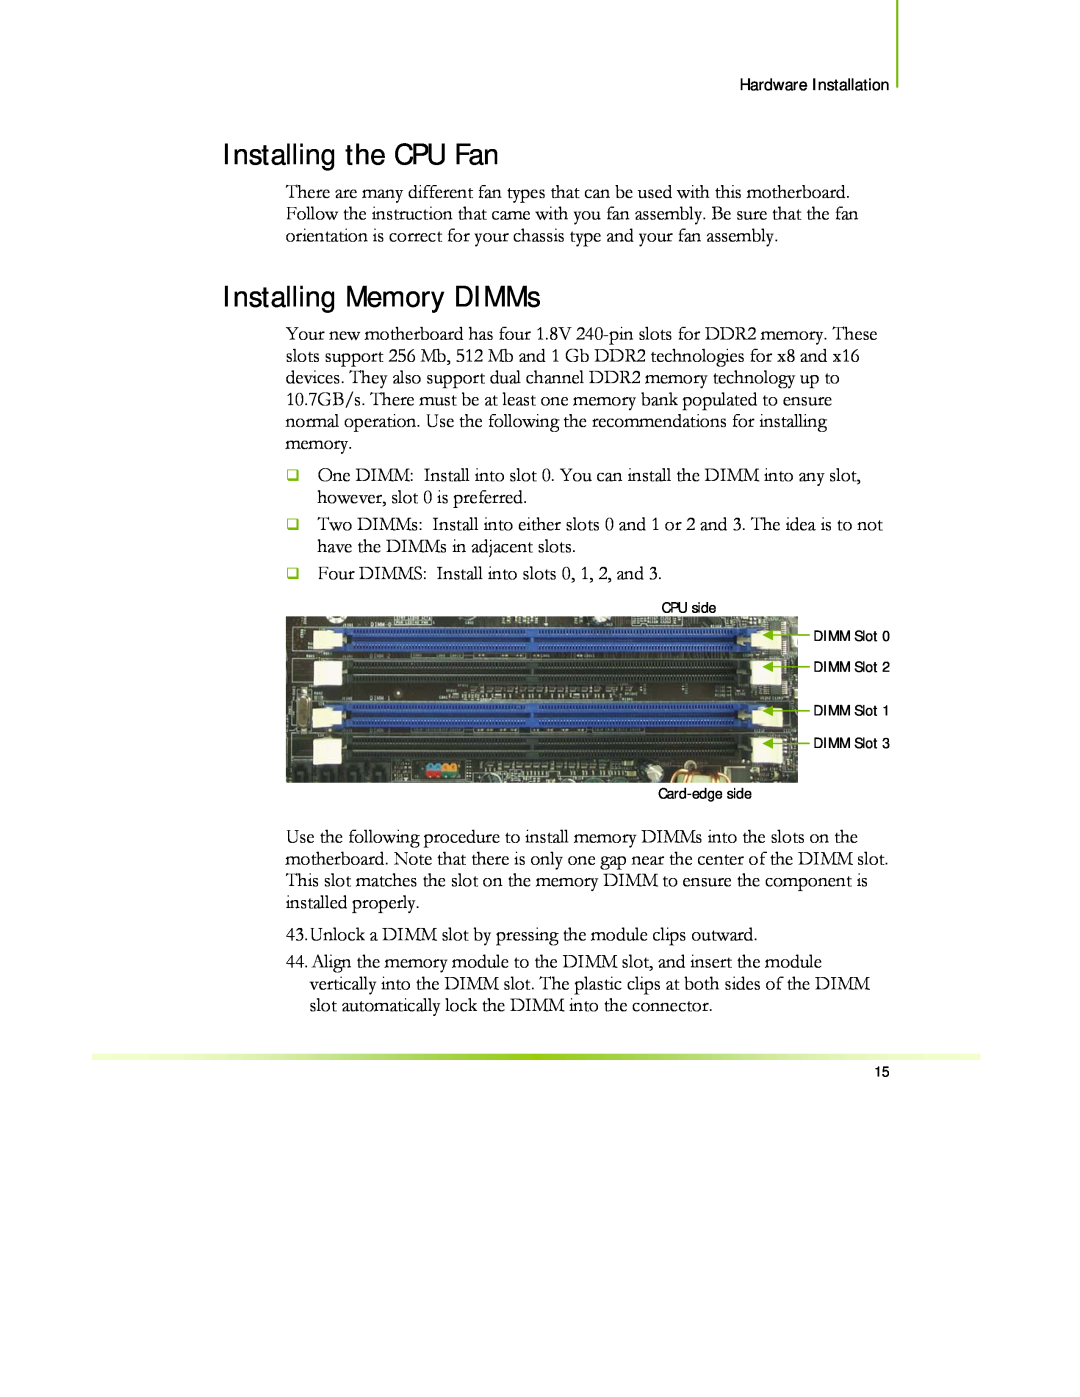 EVGA 122-CK-NF68-XX manual Installing the CPU Fan, Installing Memory DIMMs 